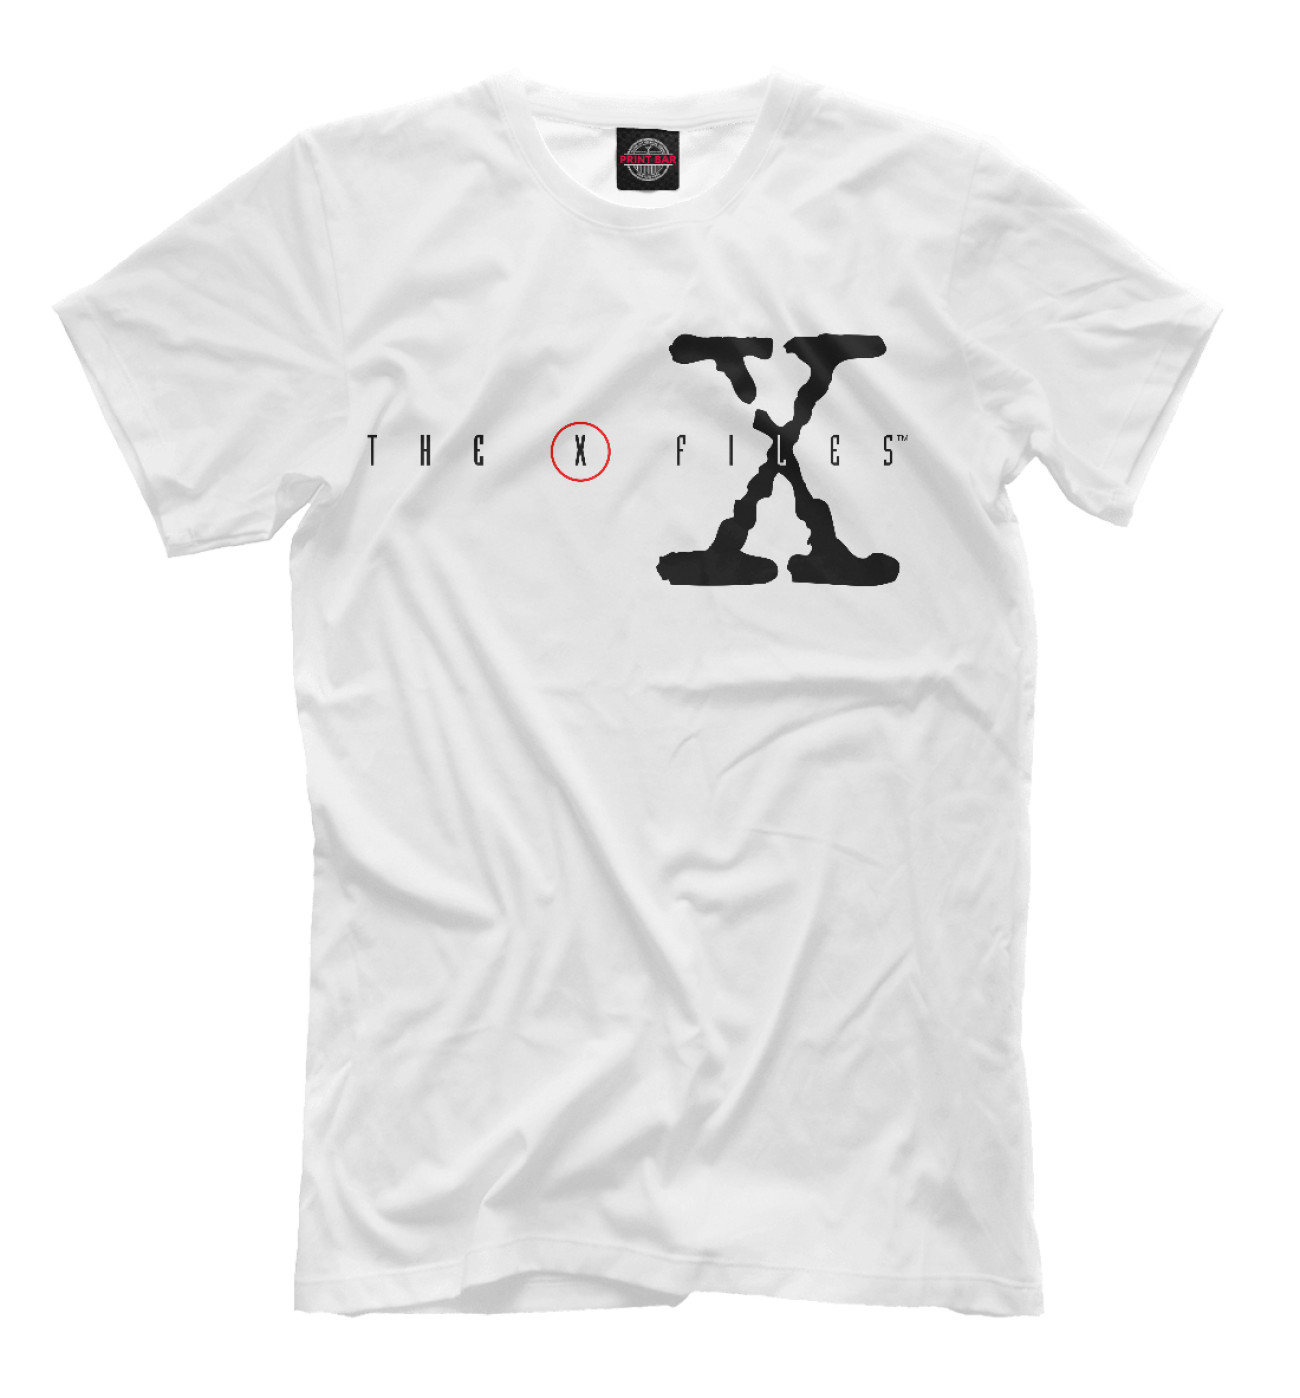 Мужская Футболка The X-Files logo, артикул: TXF-497203-fut-2